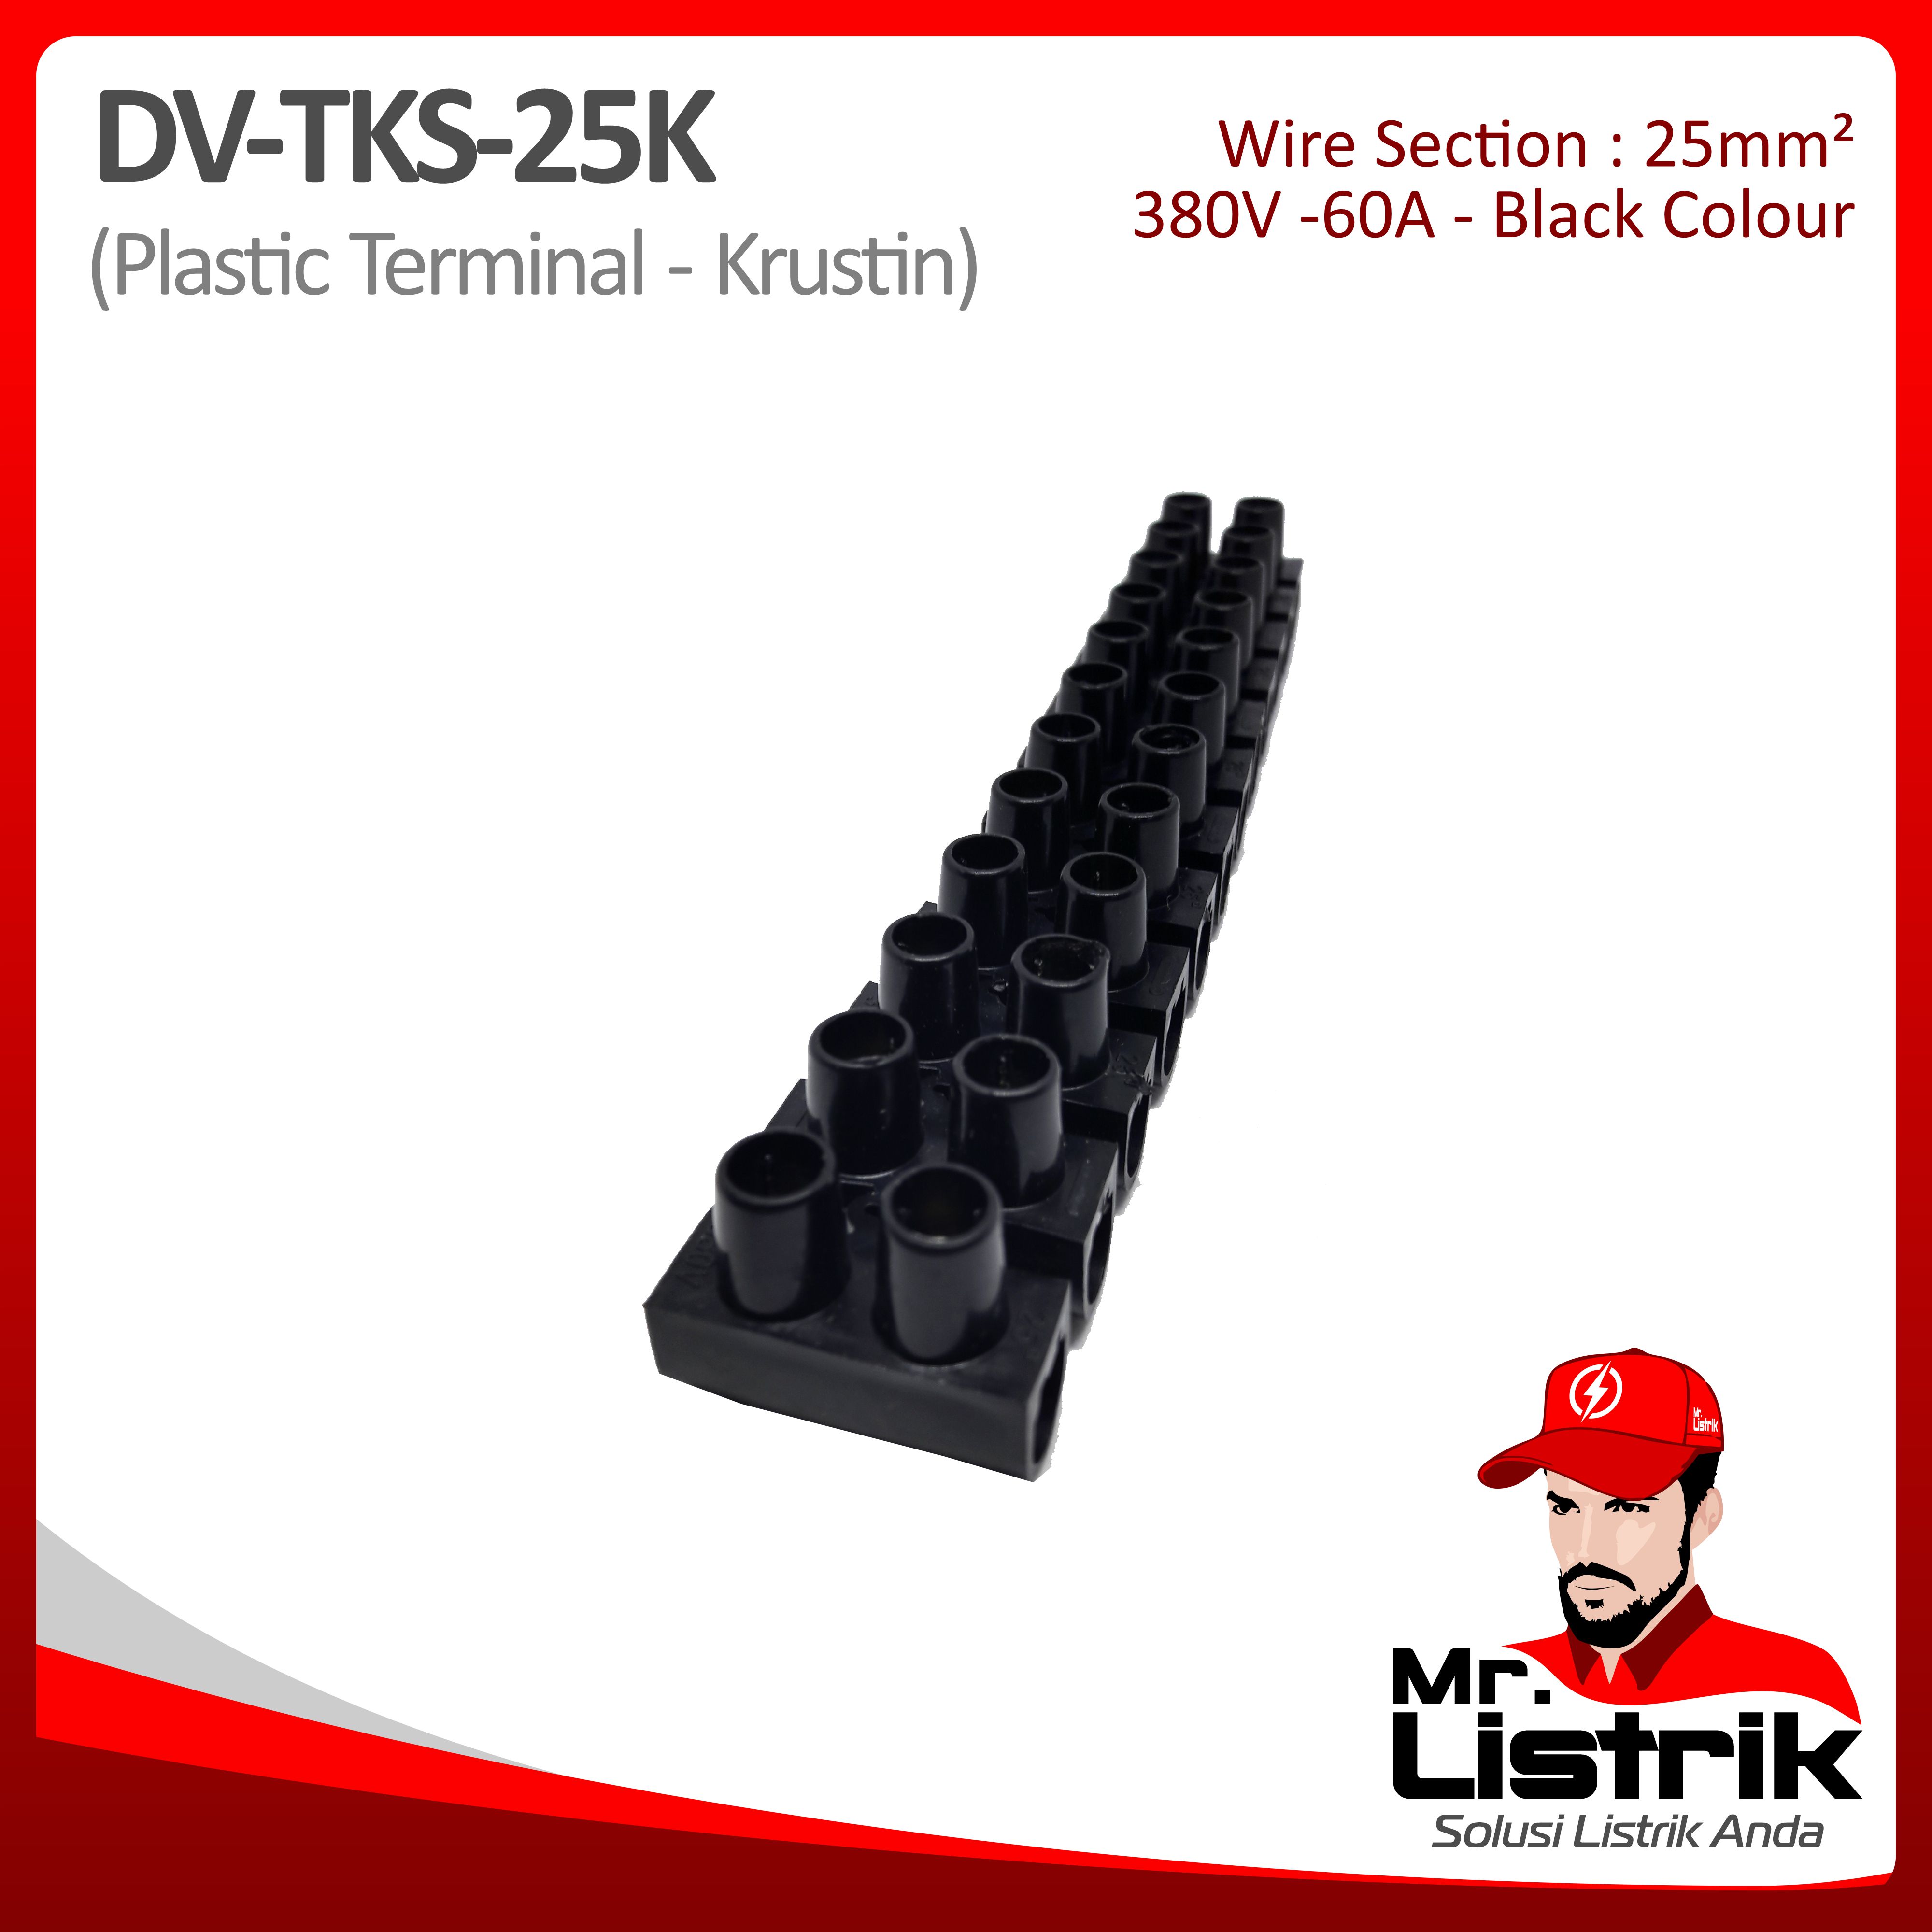 Terminal Block Krustin 25mm DV TKS-25K